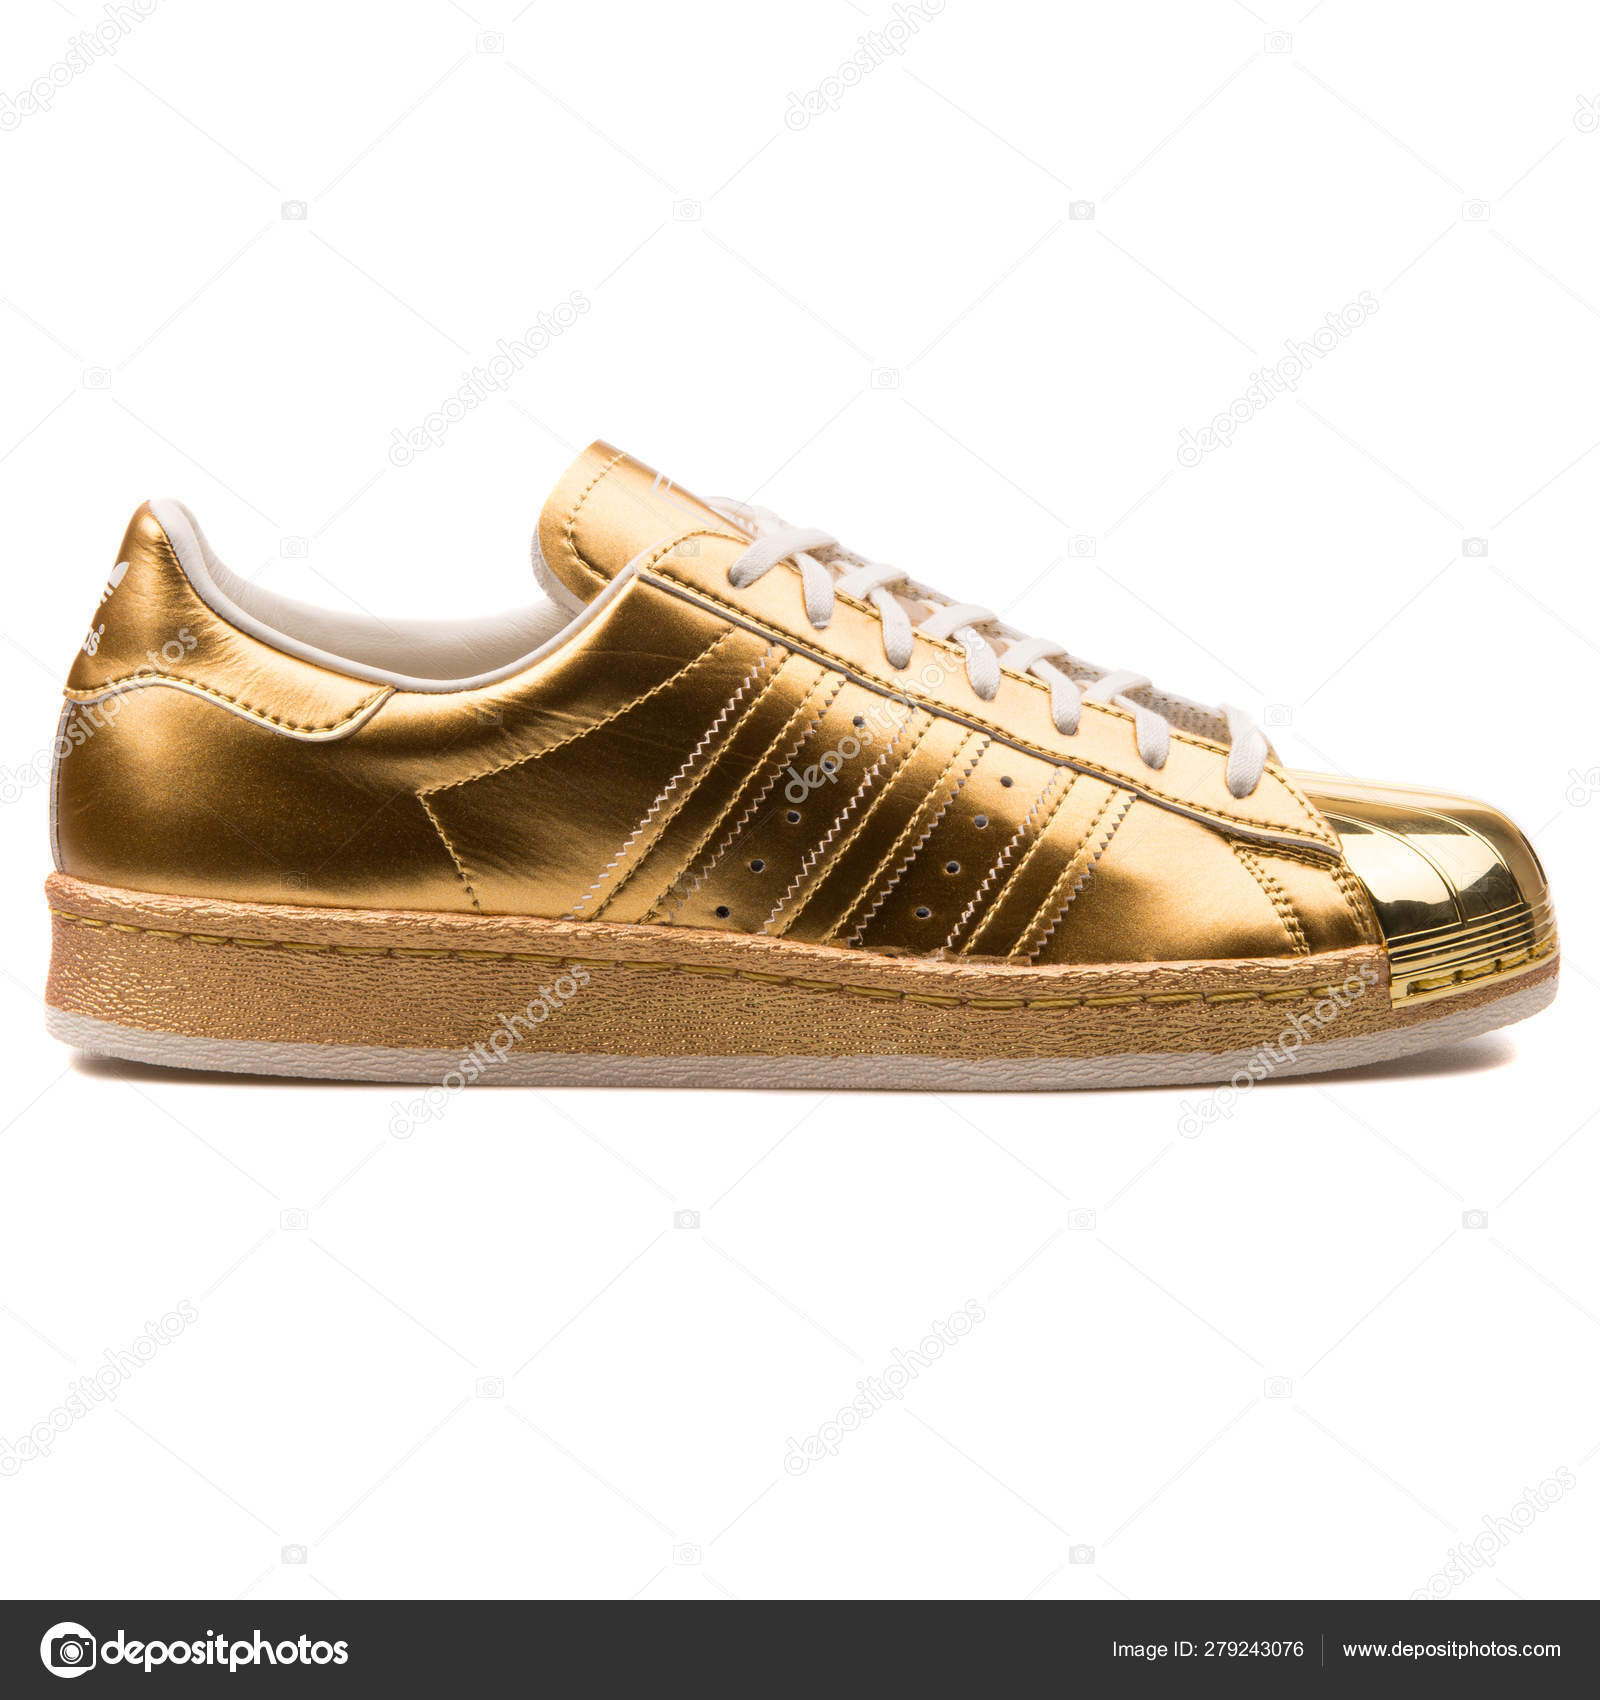 adidas superstar brown gold